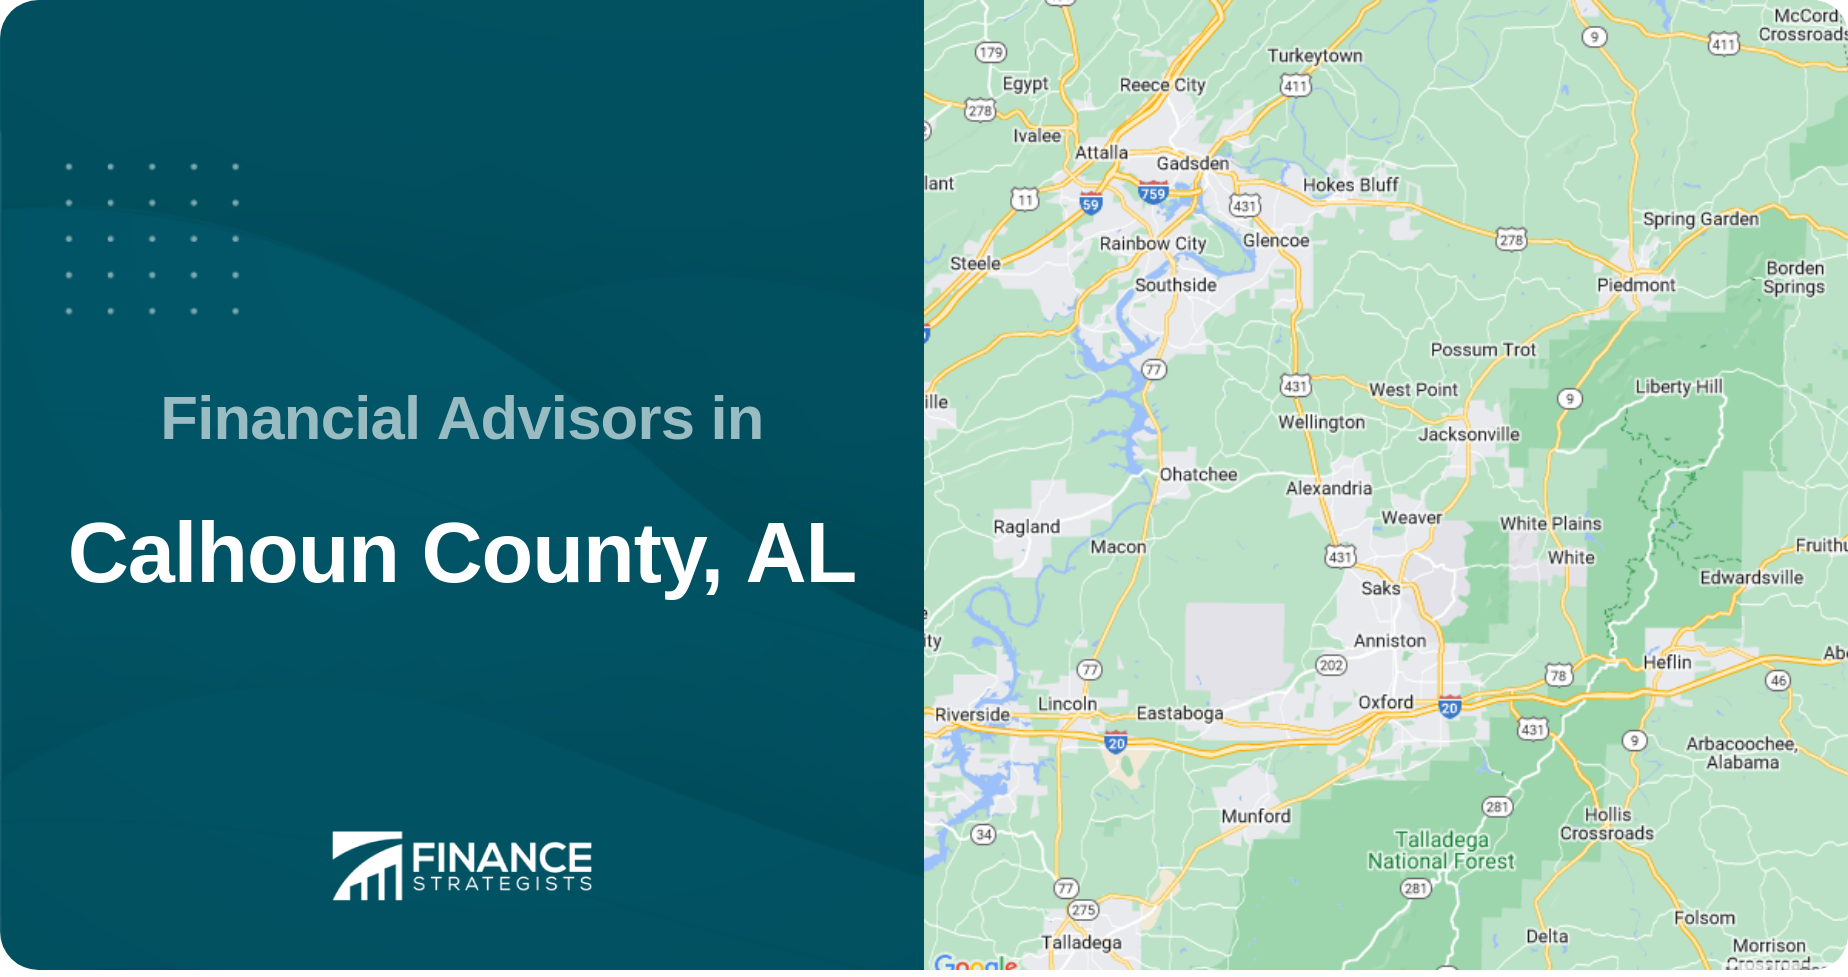 Financial Advisors in Calhoun County, AL